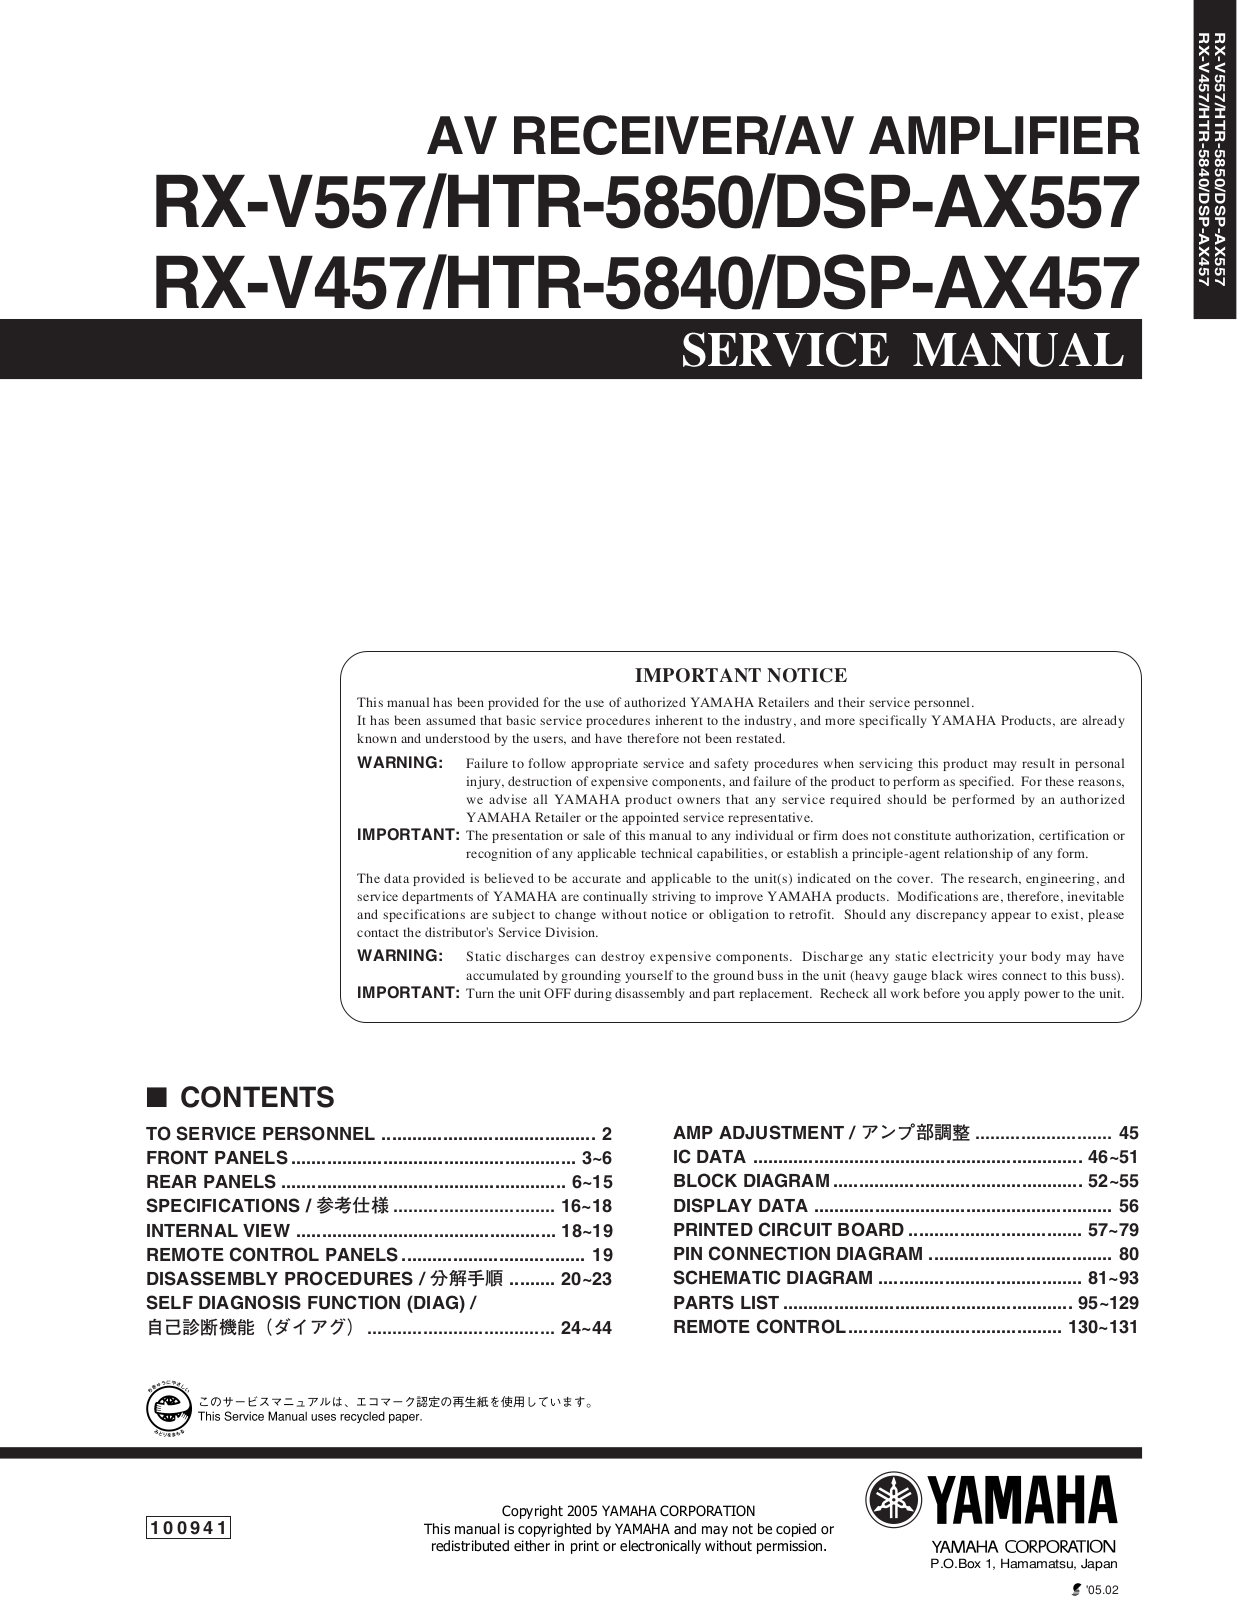 Yamaha RX-V557, HTR-5850, DSP-AX557, RX-V457, HTR-5840 Service Manual